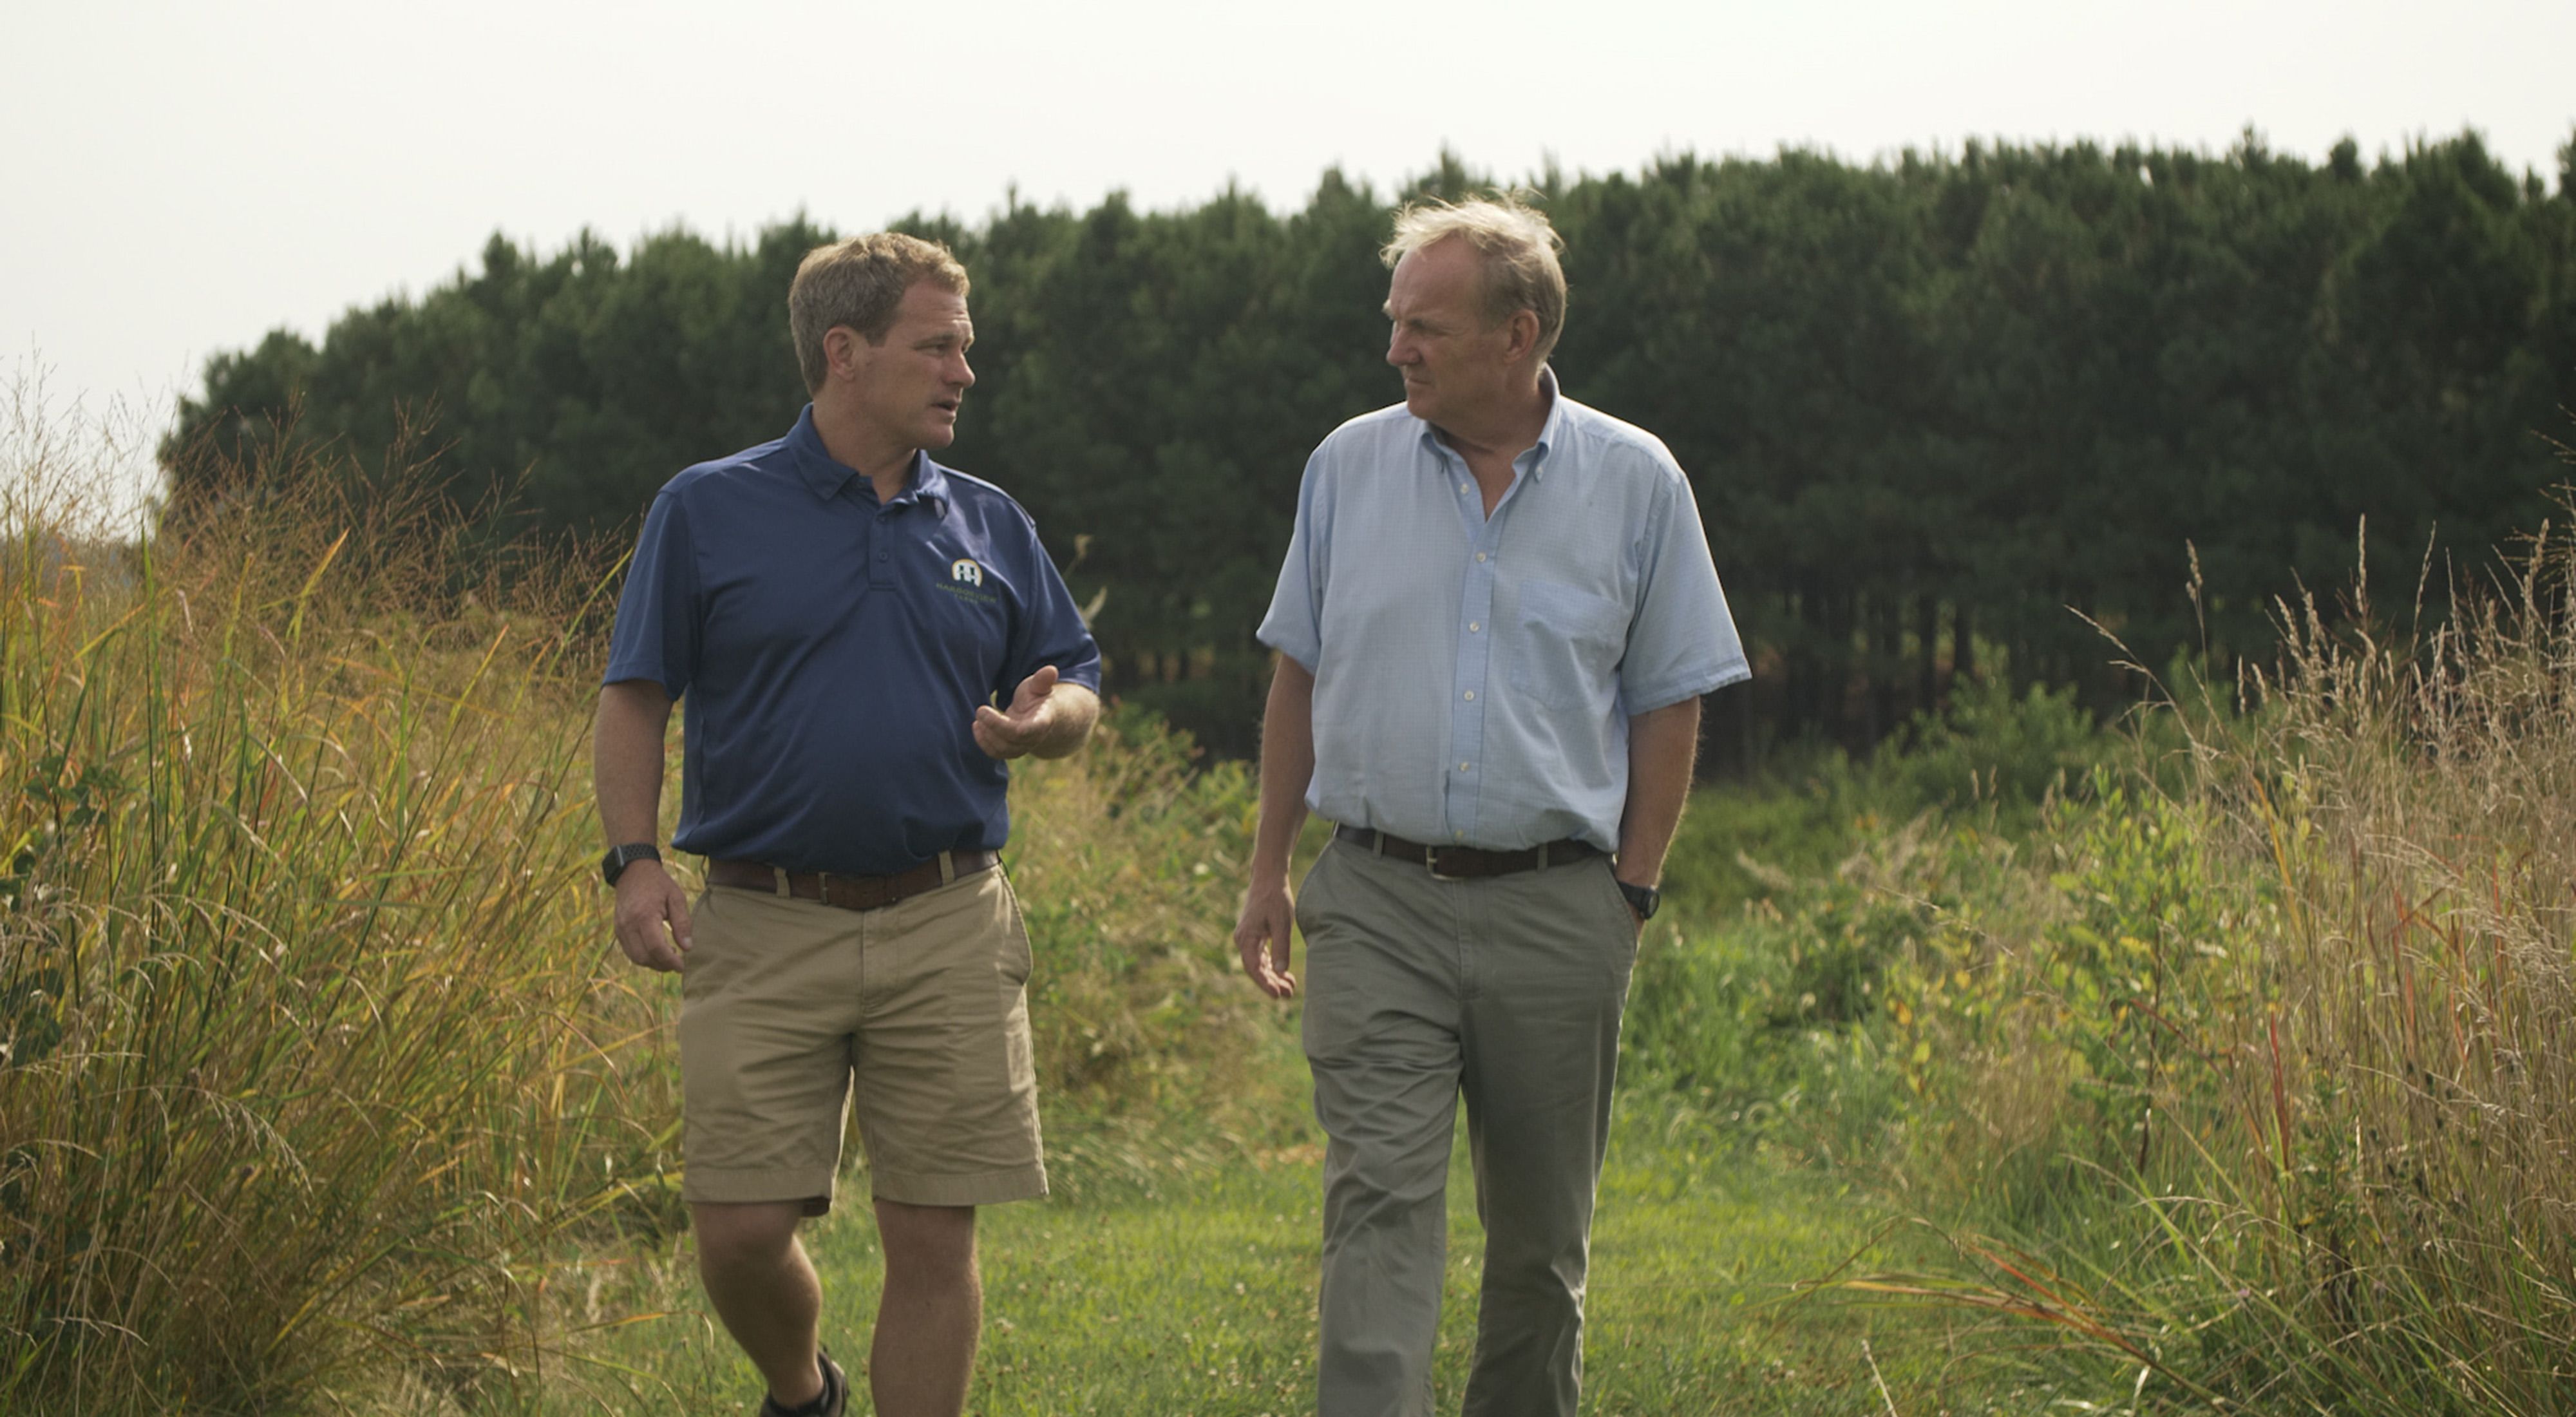 Farmer Trey Hill and landowner Joe Hickman walk through farm fields.